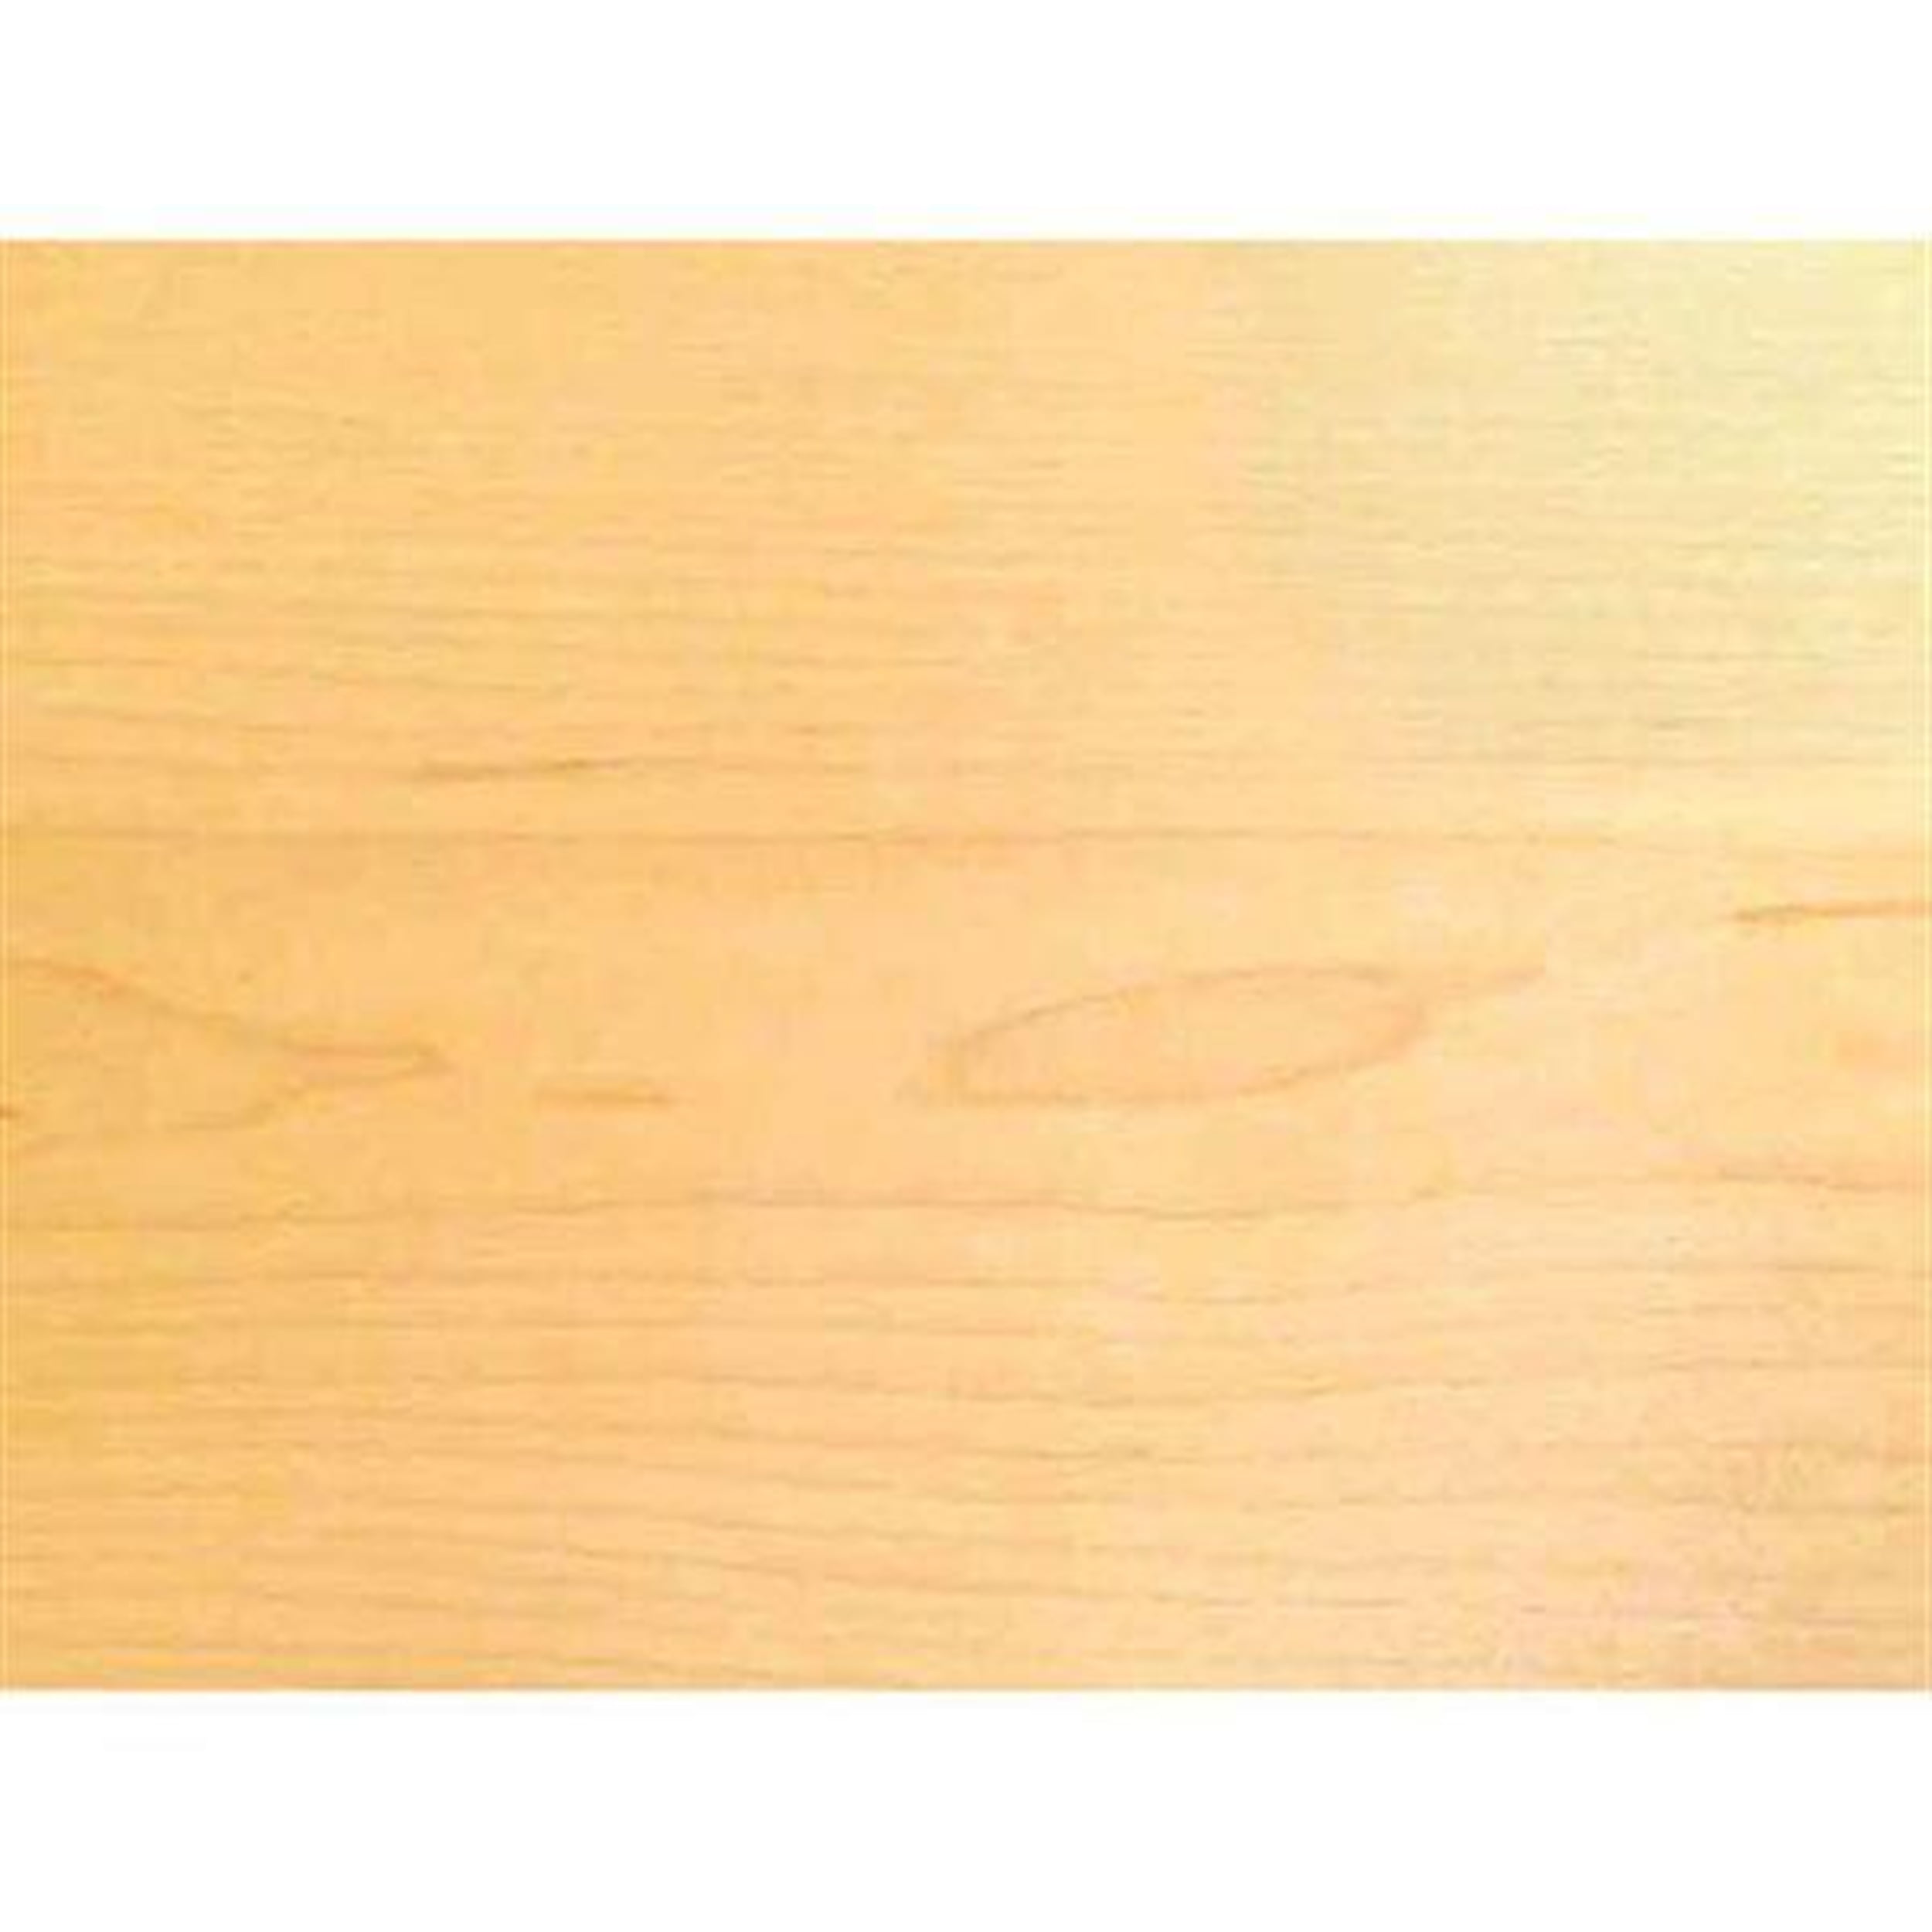 PSA White birch peel and stick 1 1/2"x25' wood edgebanding 3m 